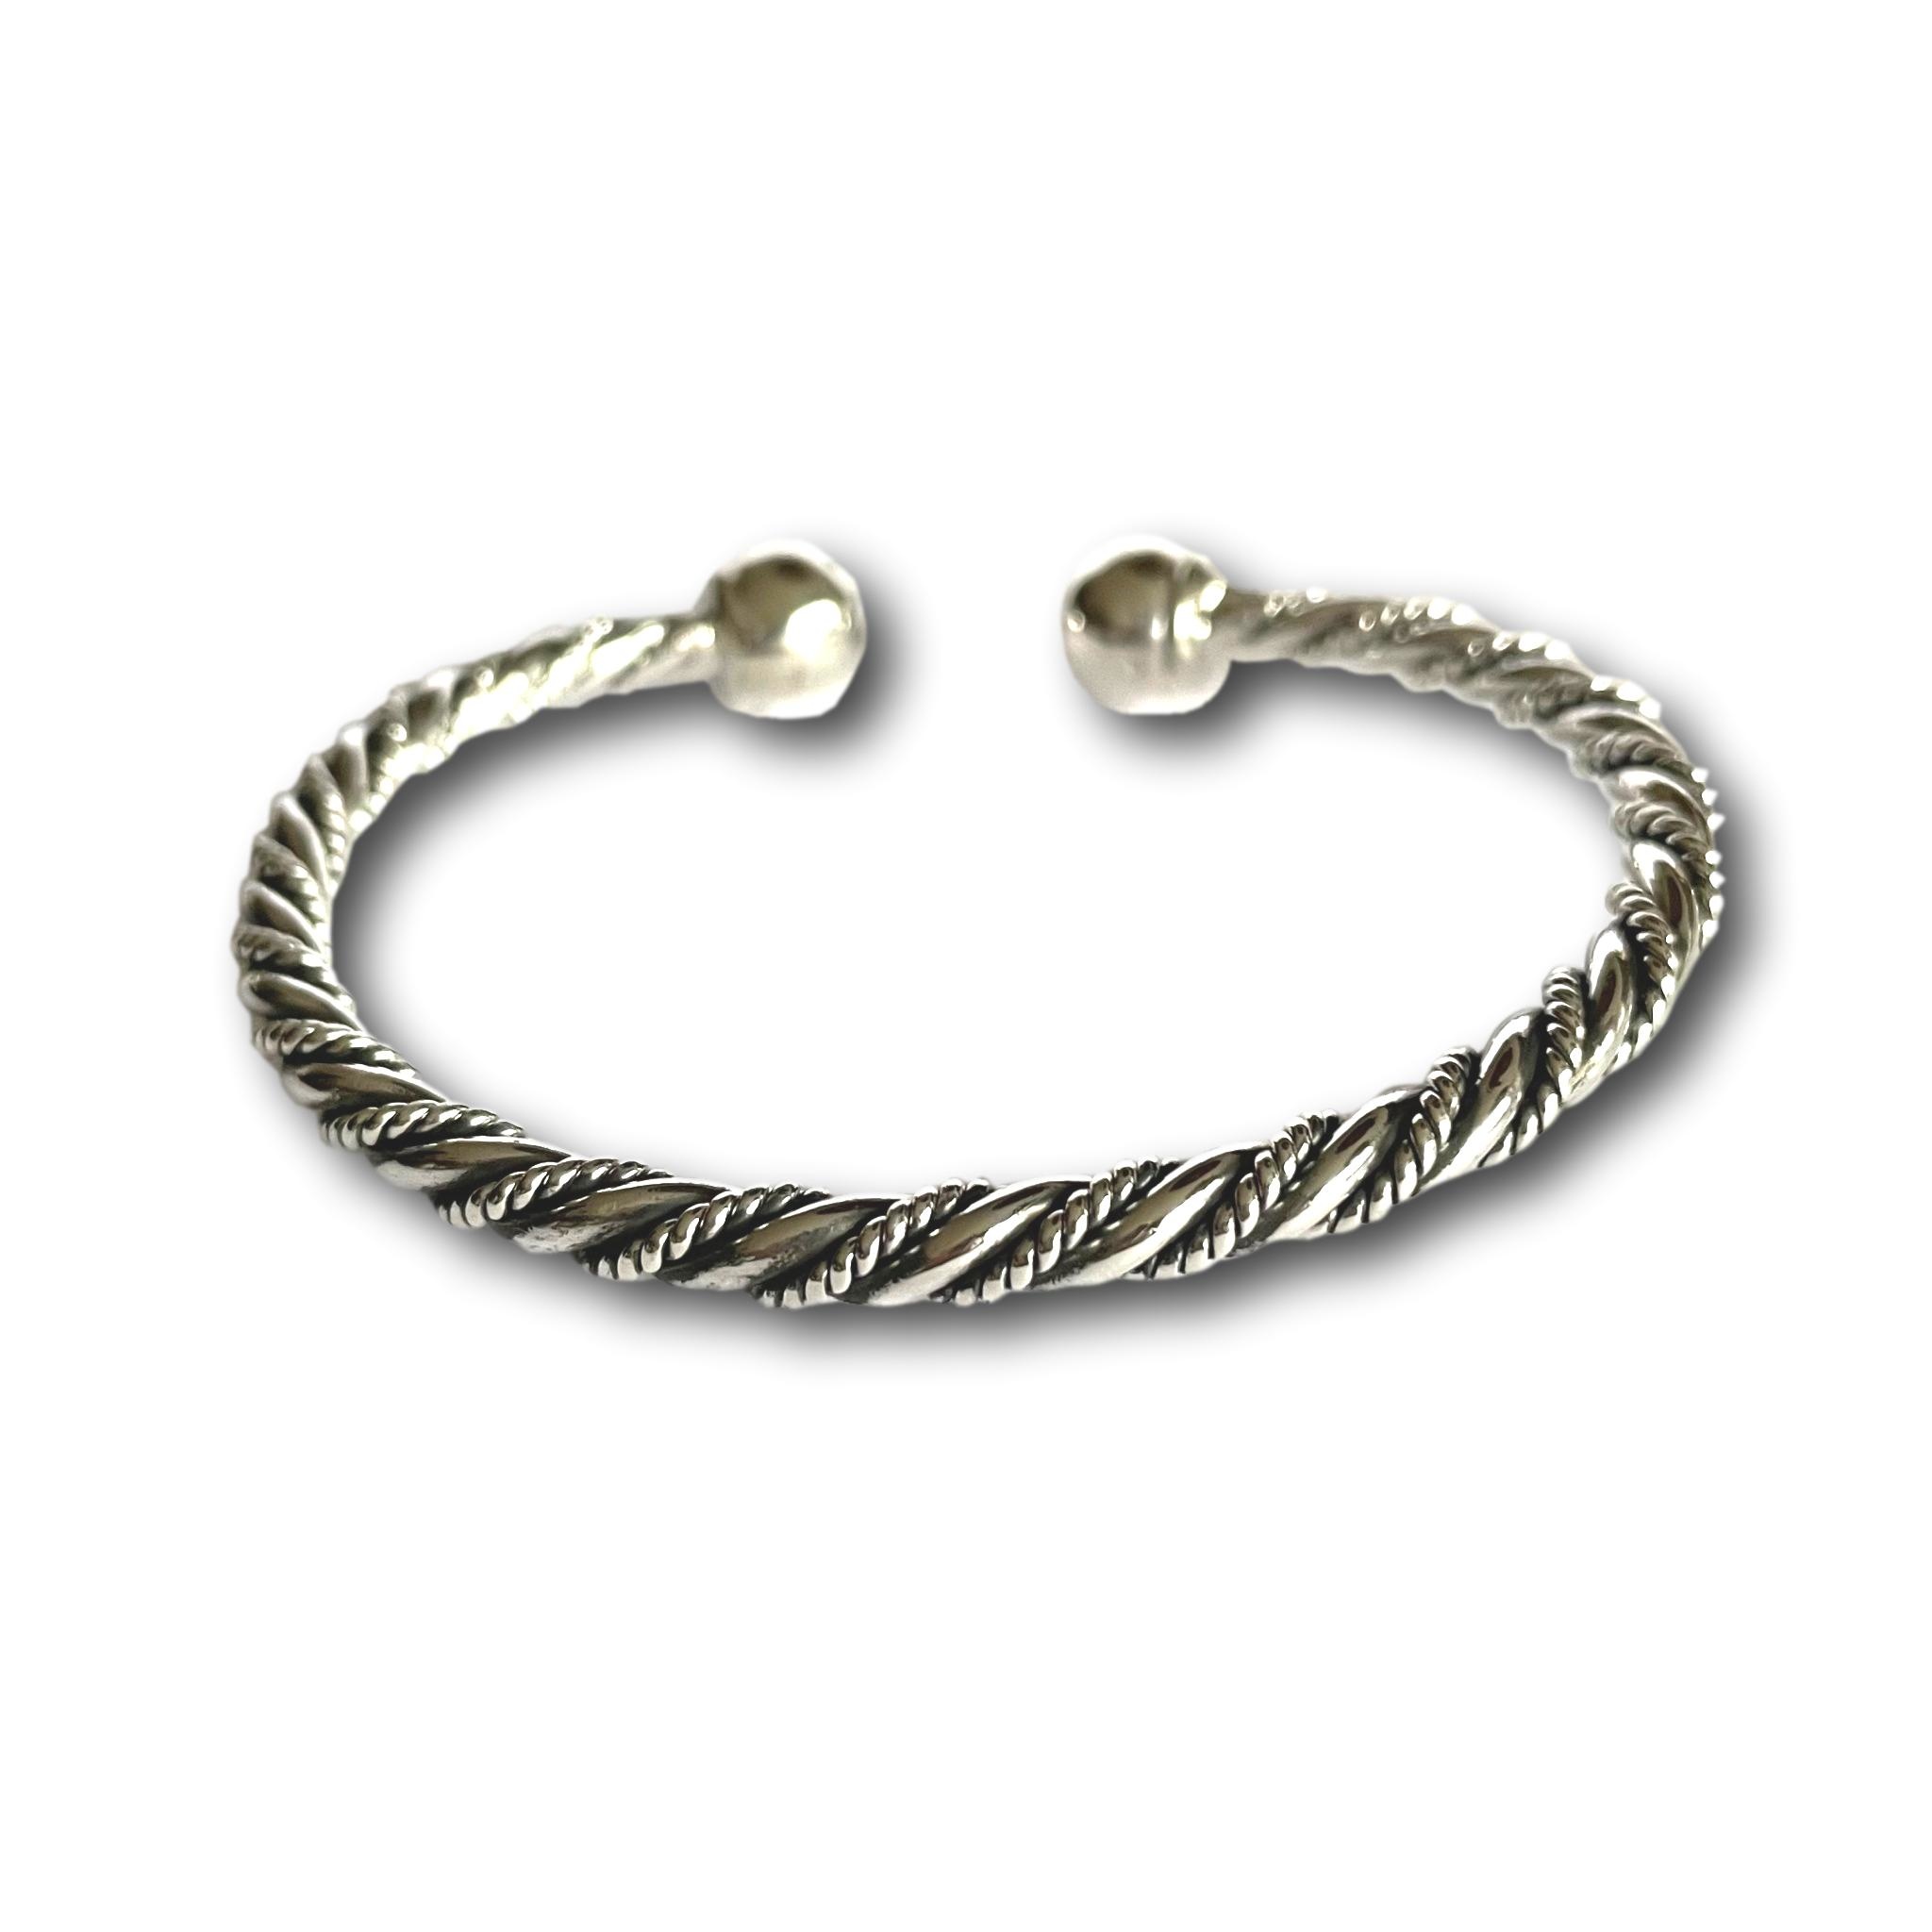 Pat maagd Barry Zilveren twisted bangle armband - Leelavadee Jewelry